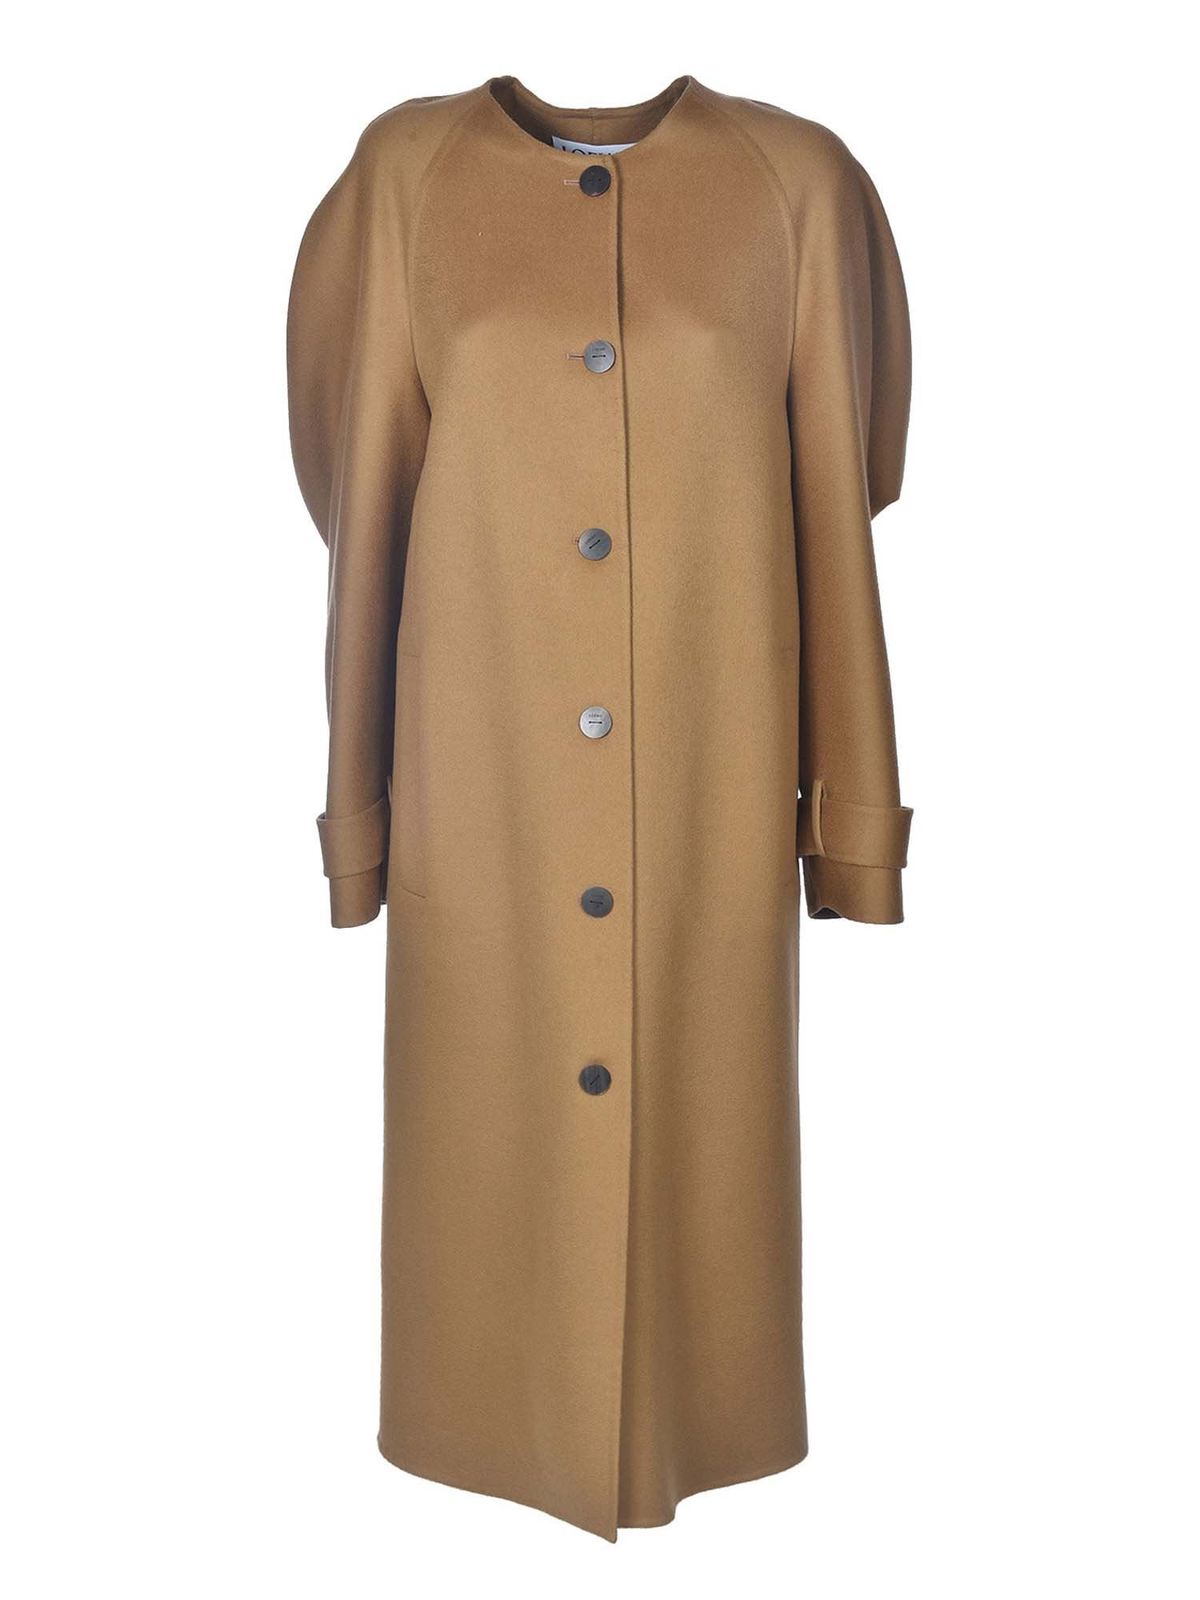 Long coats Loewe - Puffed sleeves coat in camel color - S359336XBH3150